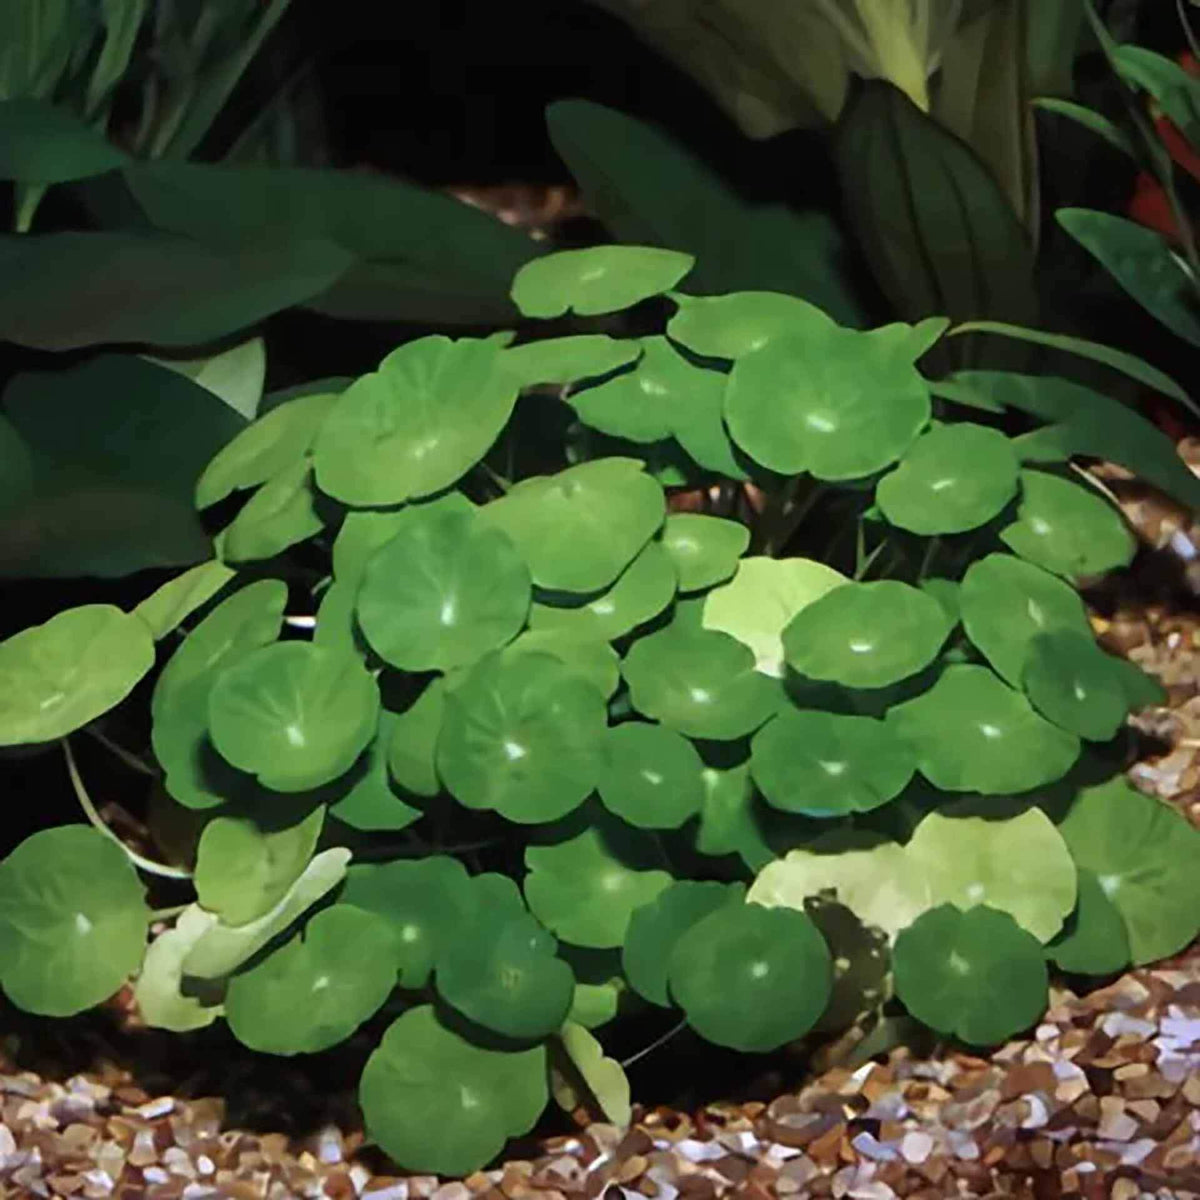 Hydrocotyle leucocephala ‘Brazilian Pennywort’ Live Plant - Tissue Culture